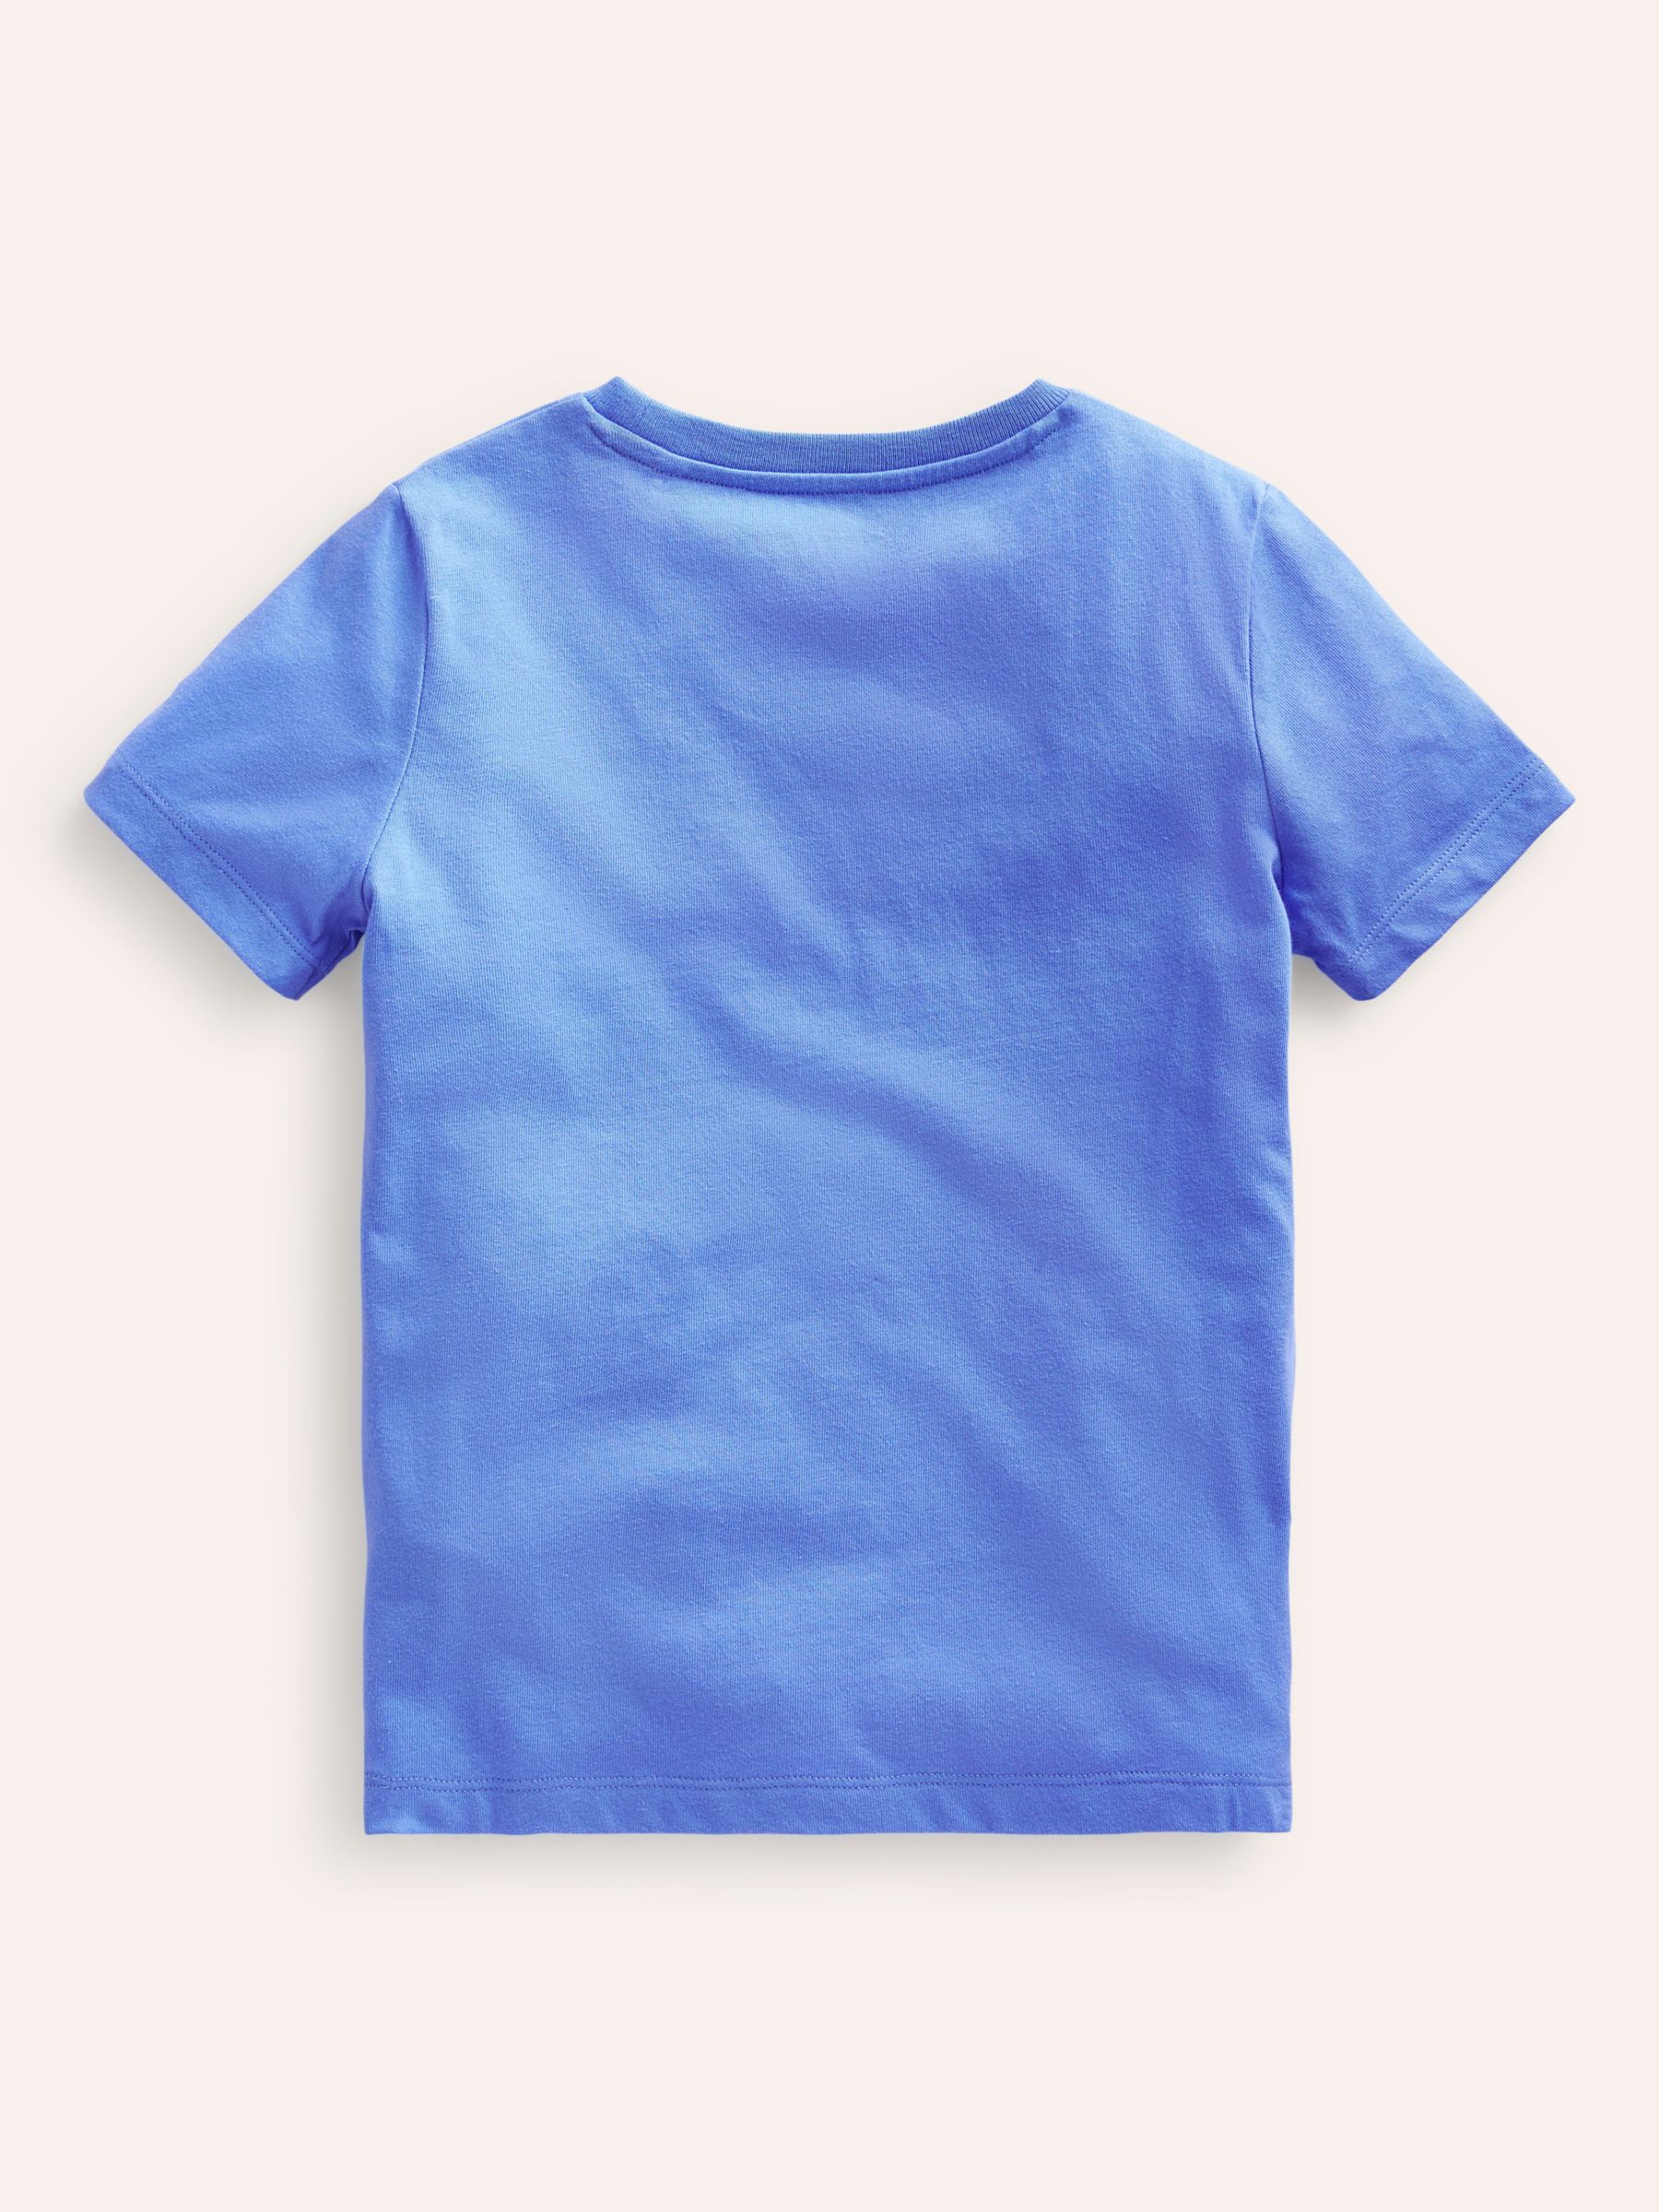 Buy Mini Boden Kids' Chainstitch Dino T-Shirt, Surf Blue/Multi Online at johnlewis.com